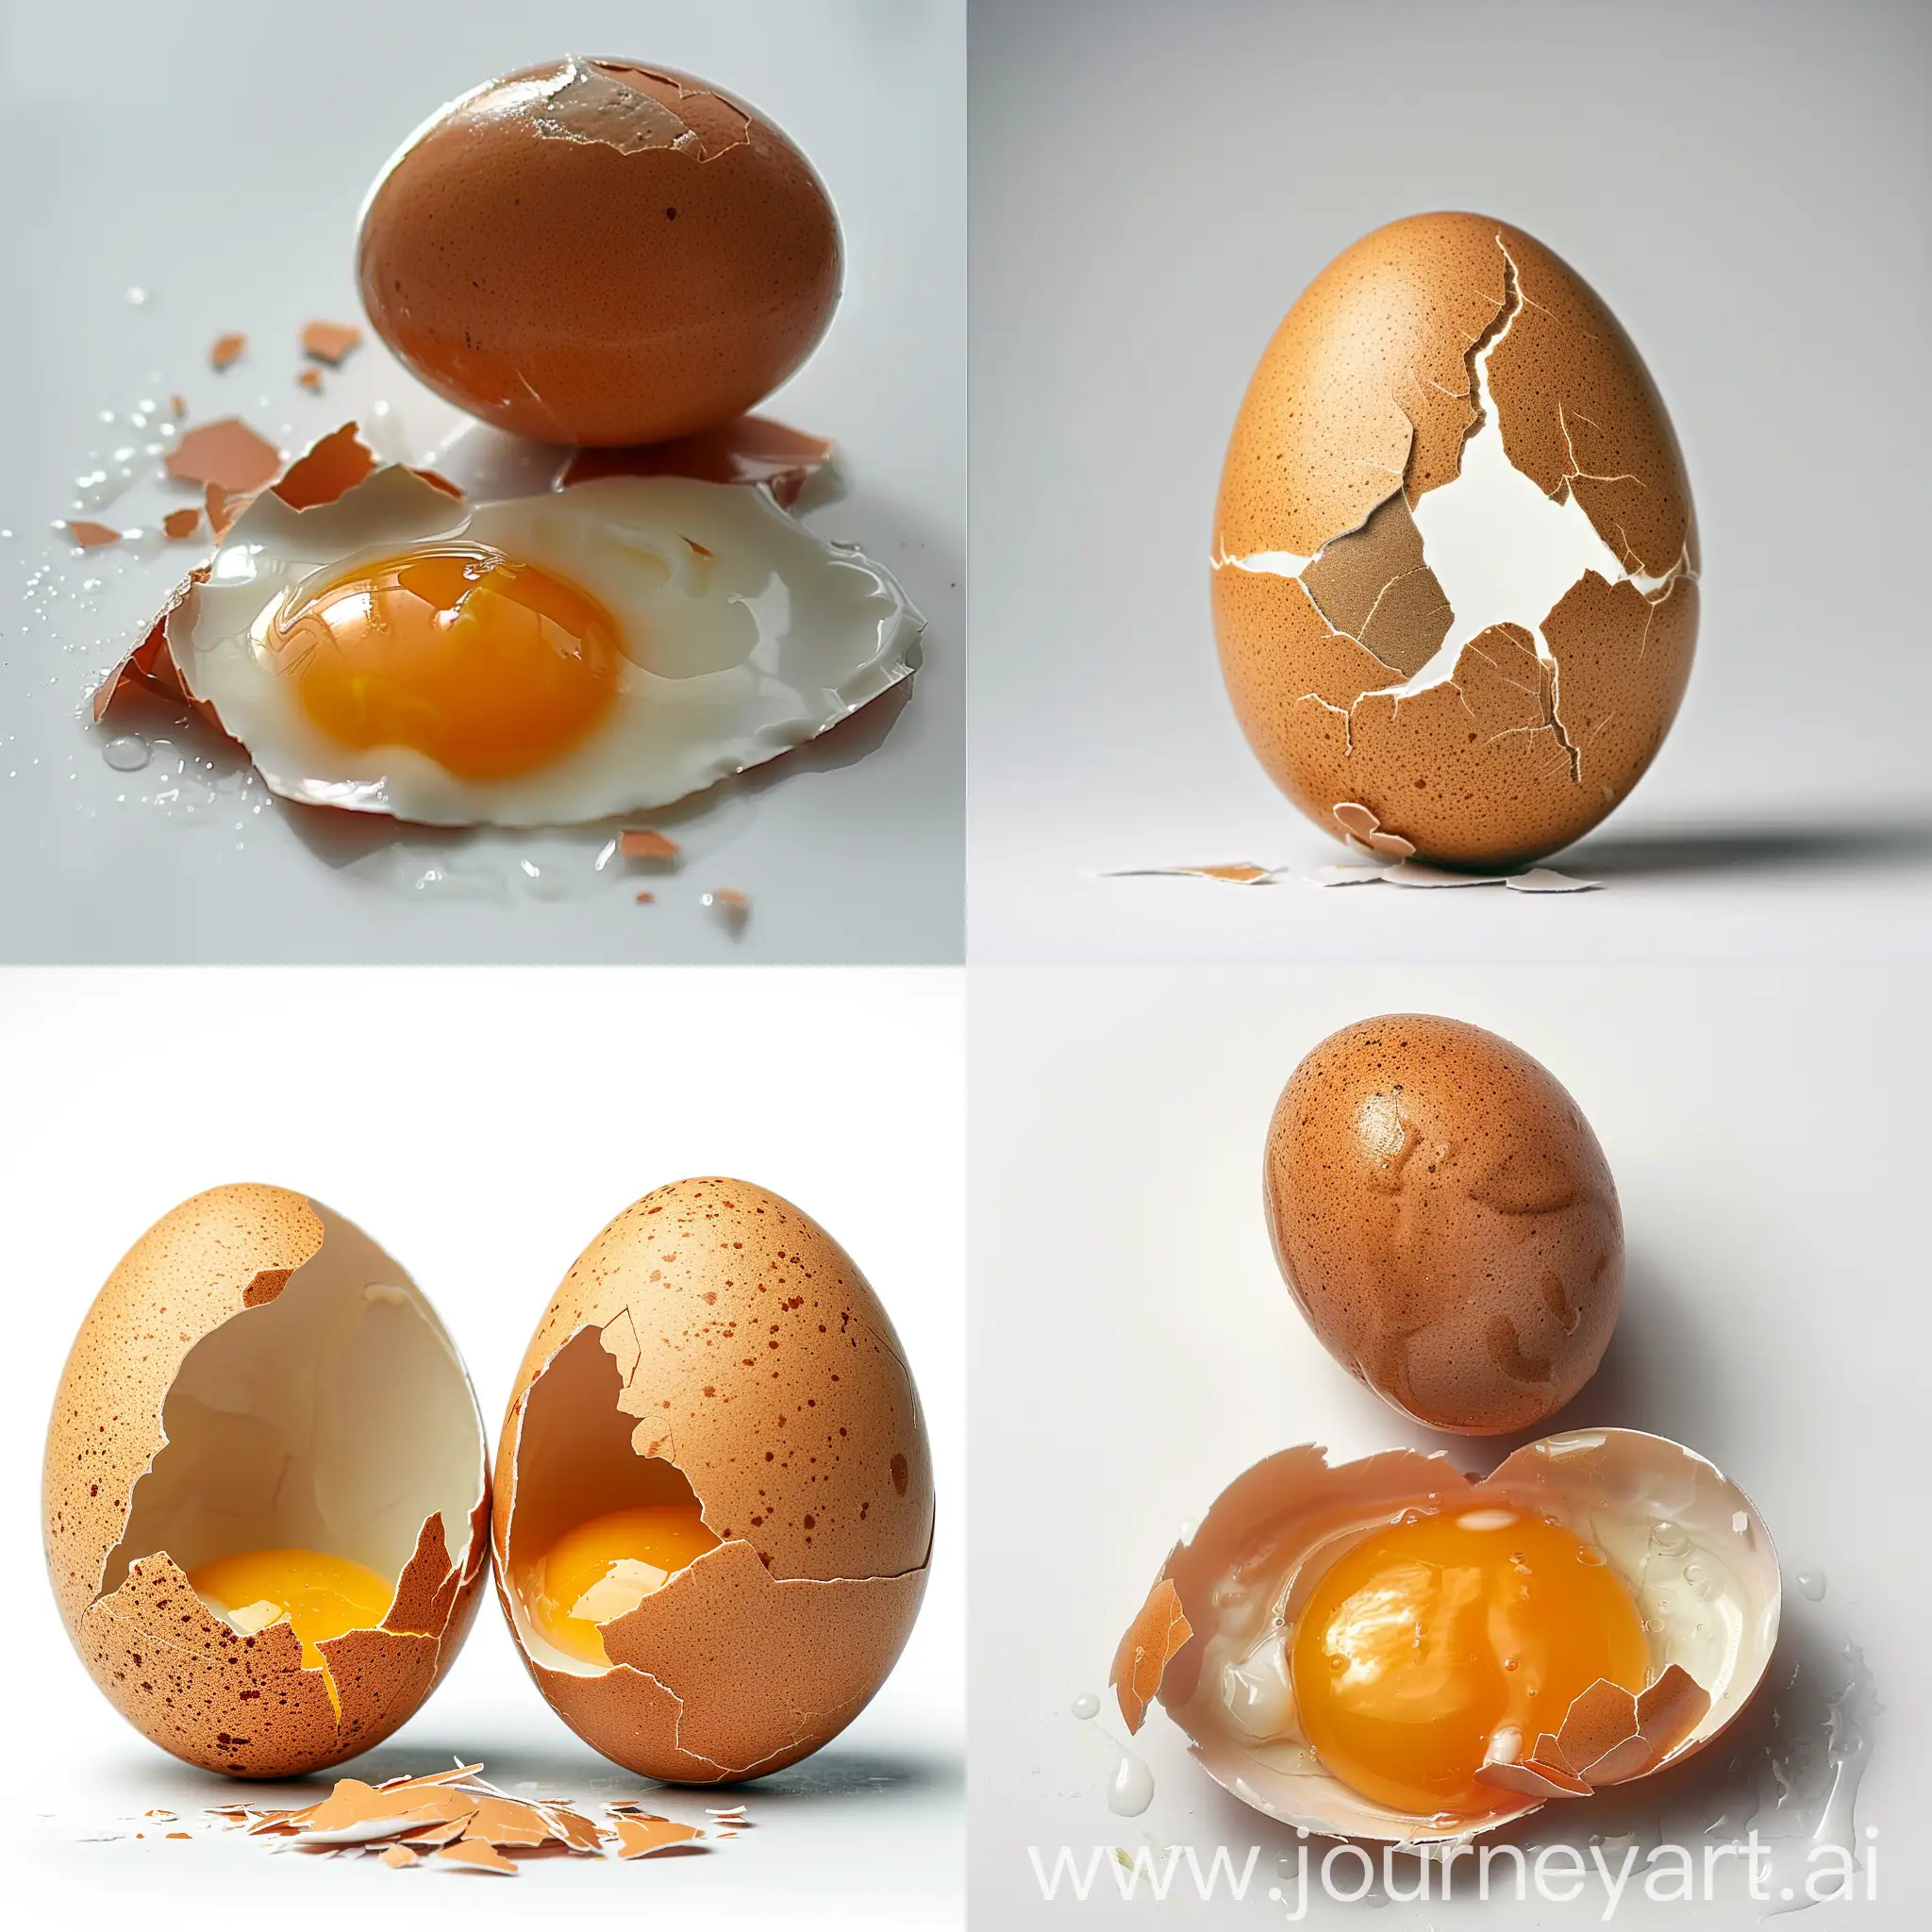 Cracked-Egg-Split-in-Two-Halves-on-a-White-Background